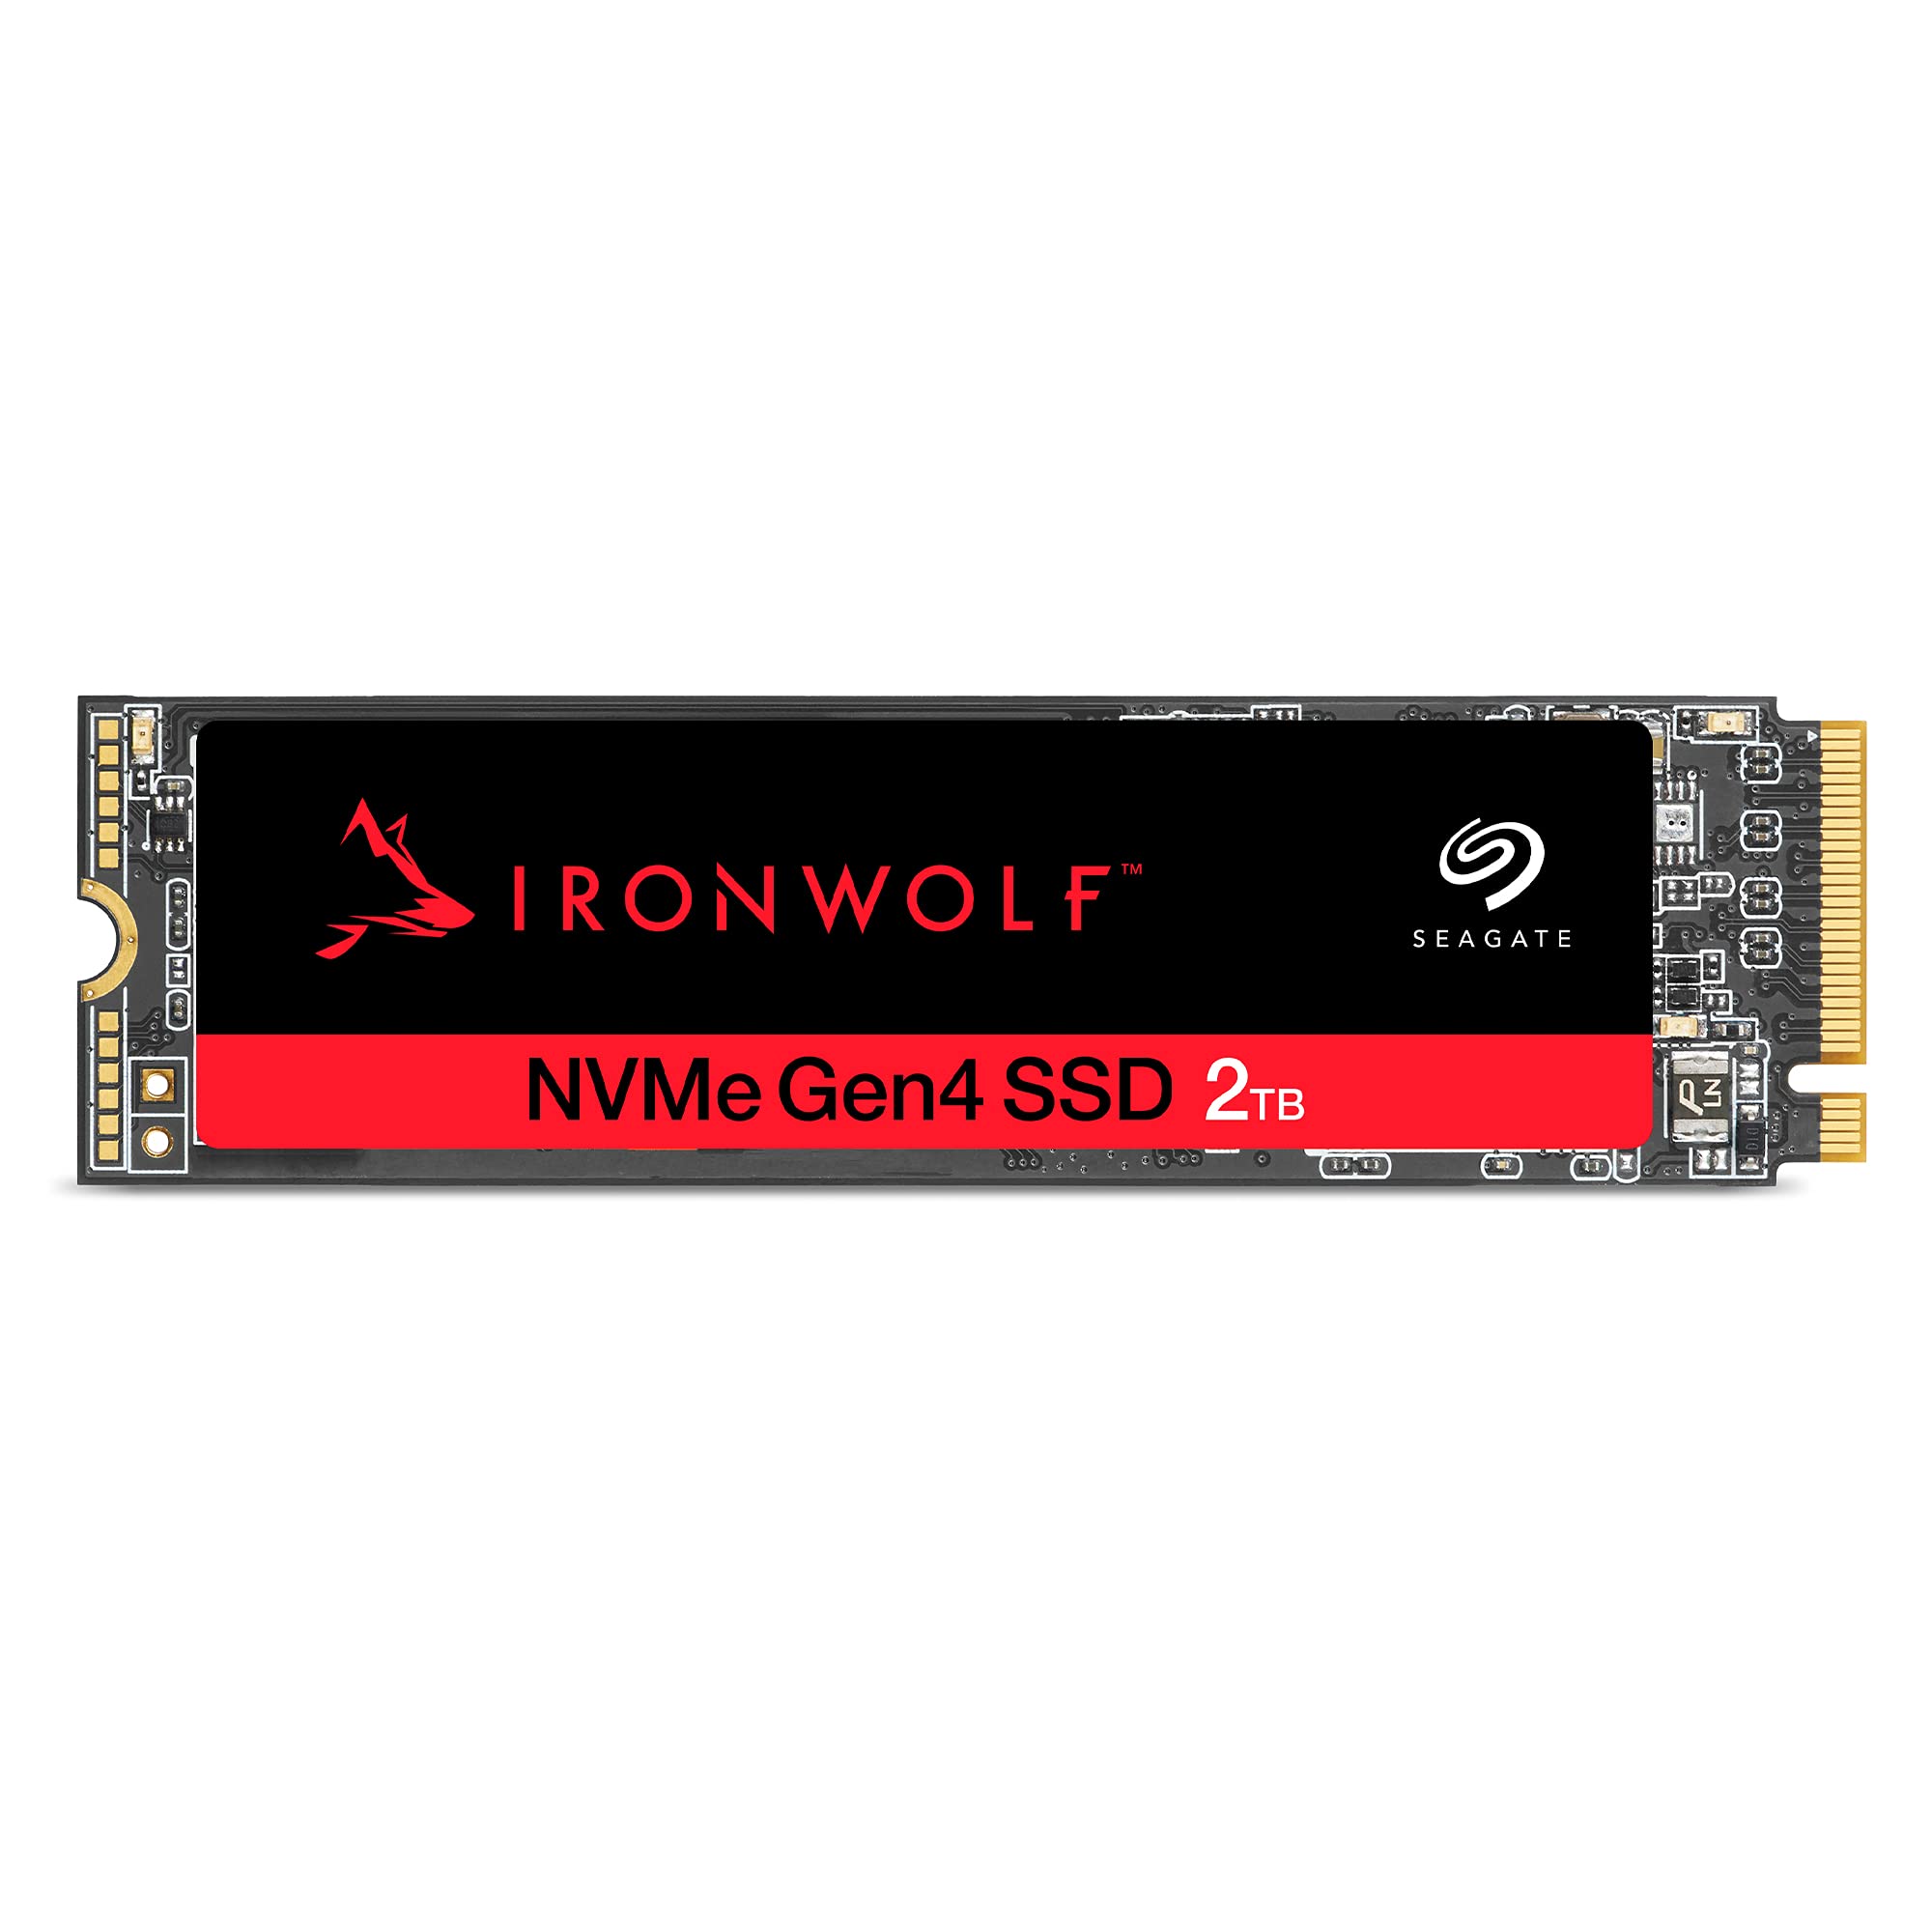 IRONWOLF 525 NVME SSD 2TB